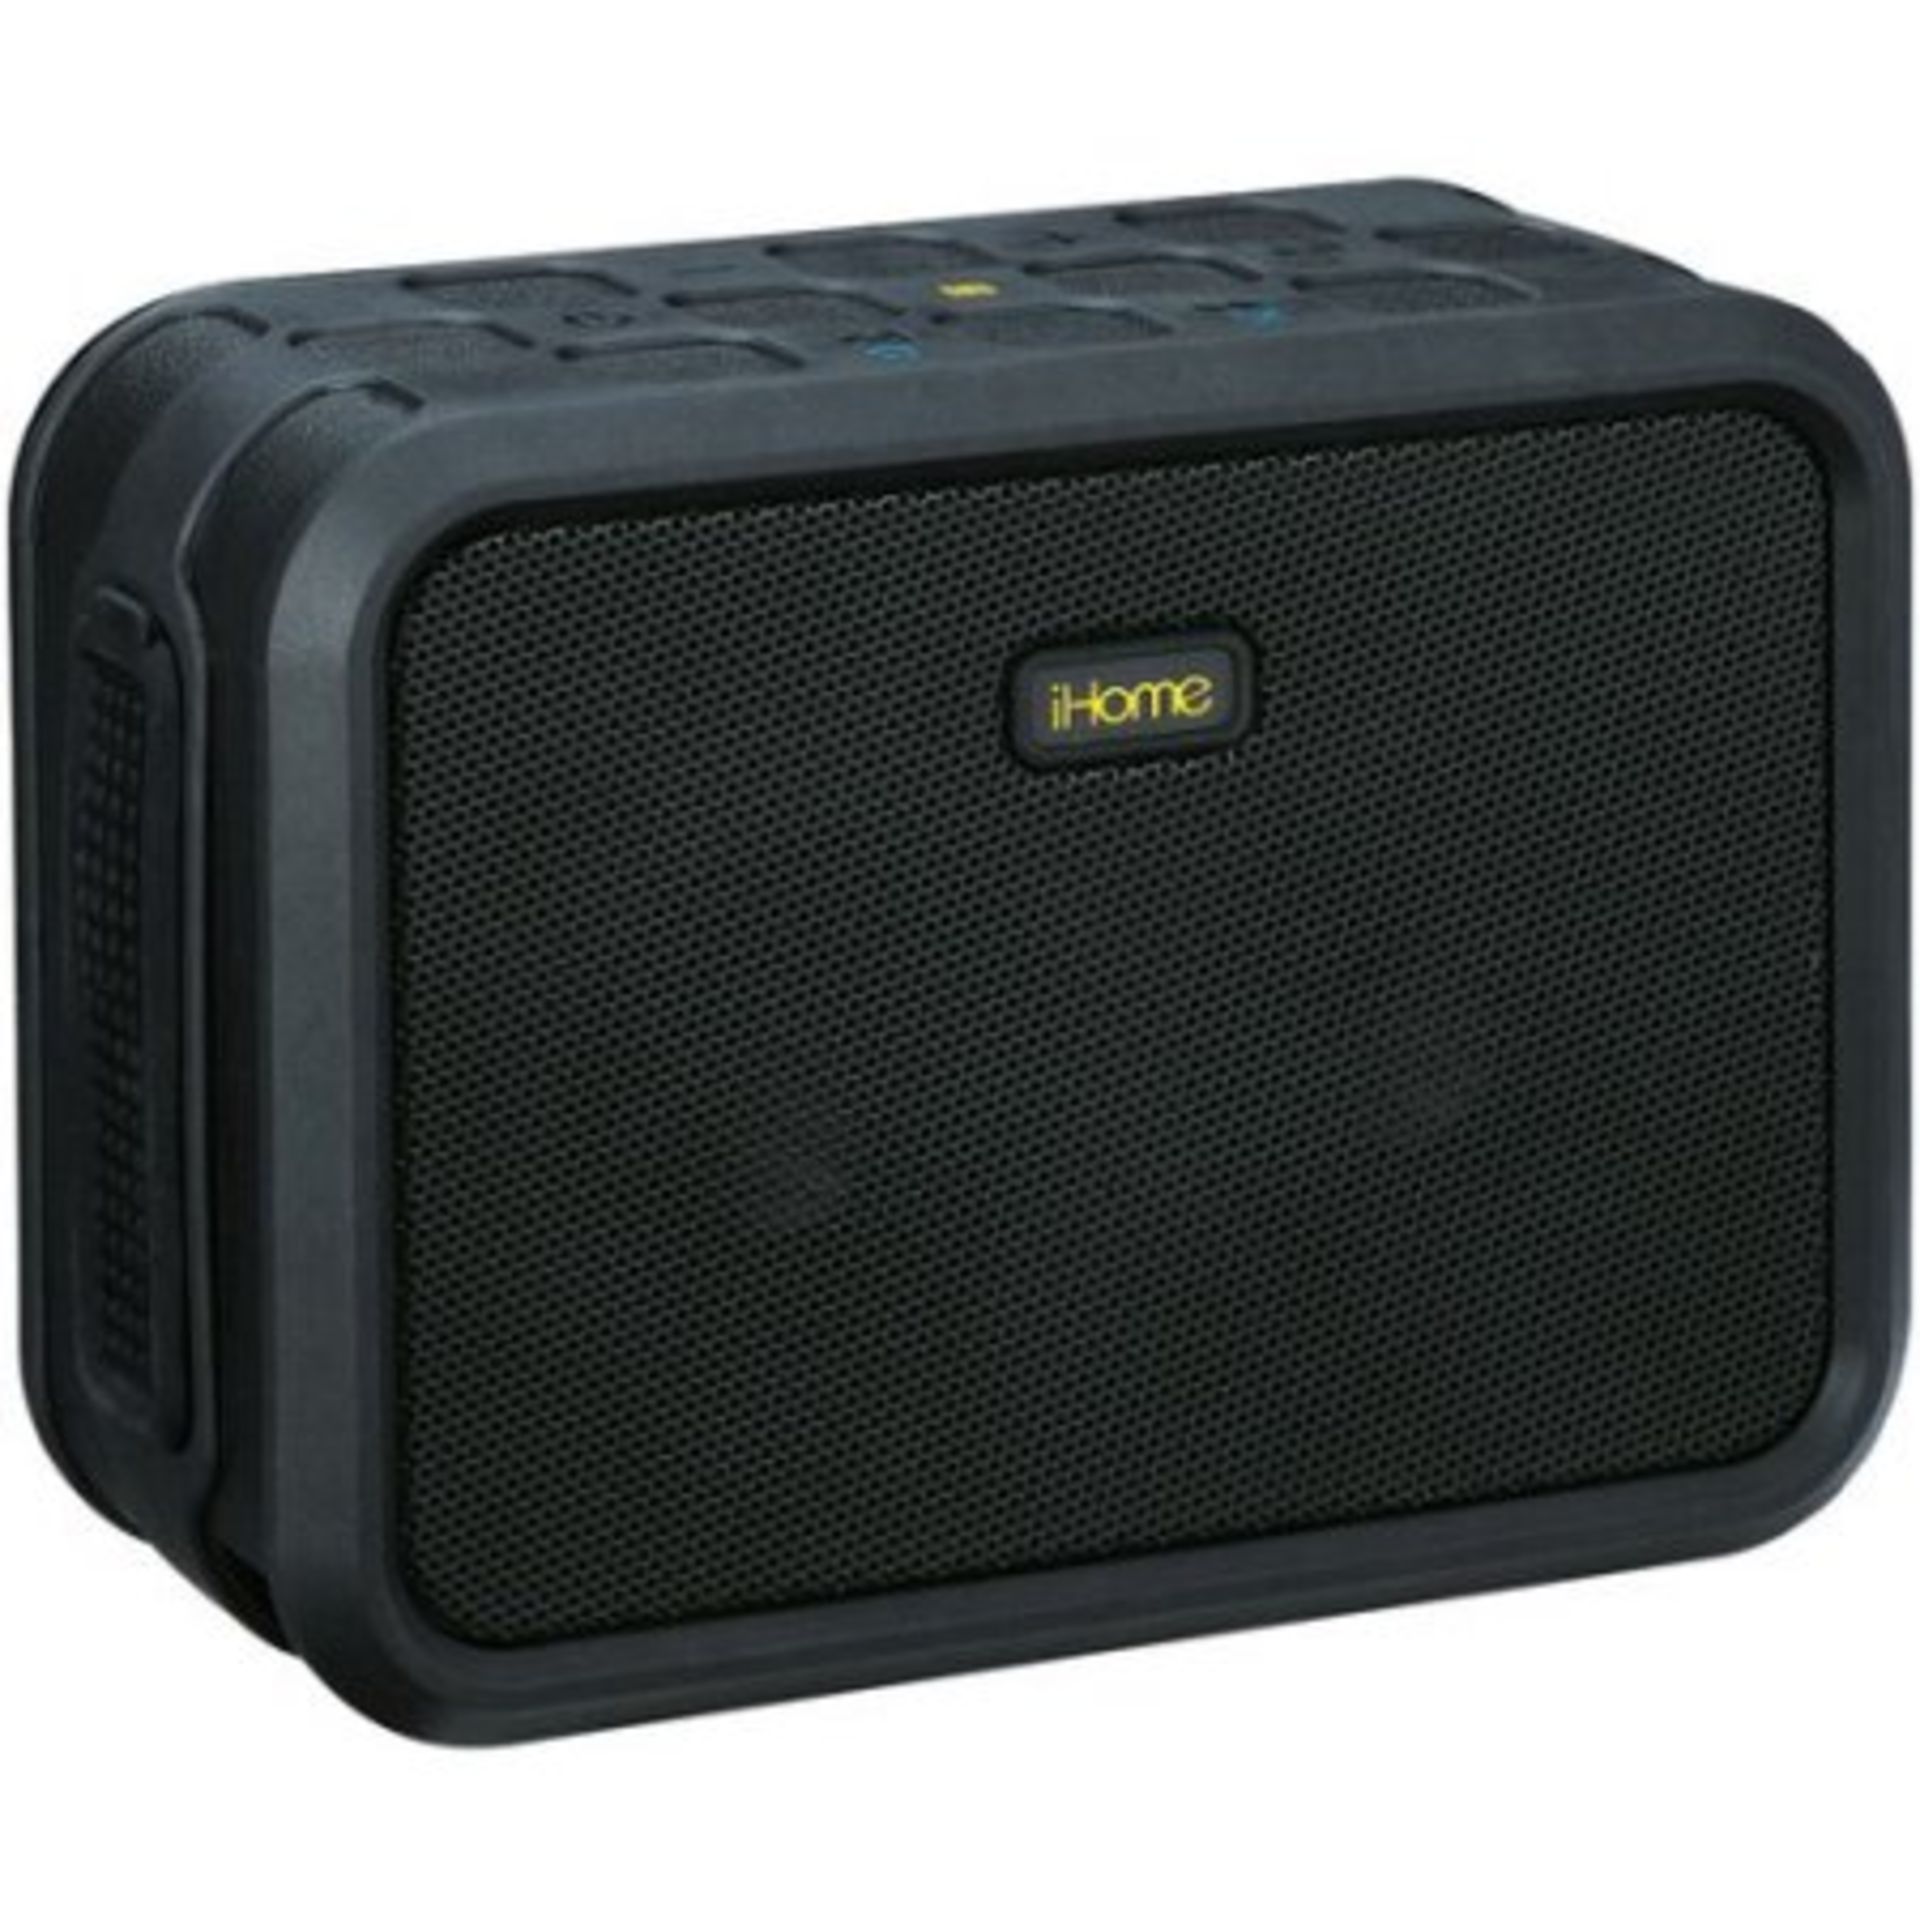 V Brand New IHome Rugged Portable Waterproof Bluetooth Stereo Speaker-IPX7 Waterproof Rating-4400